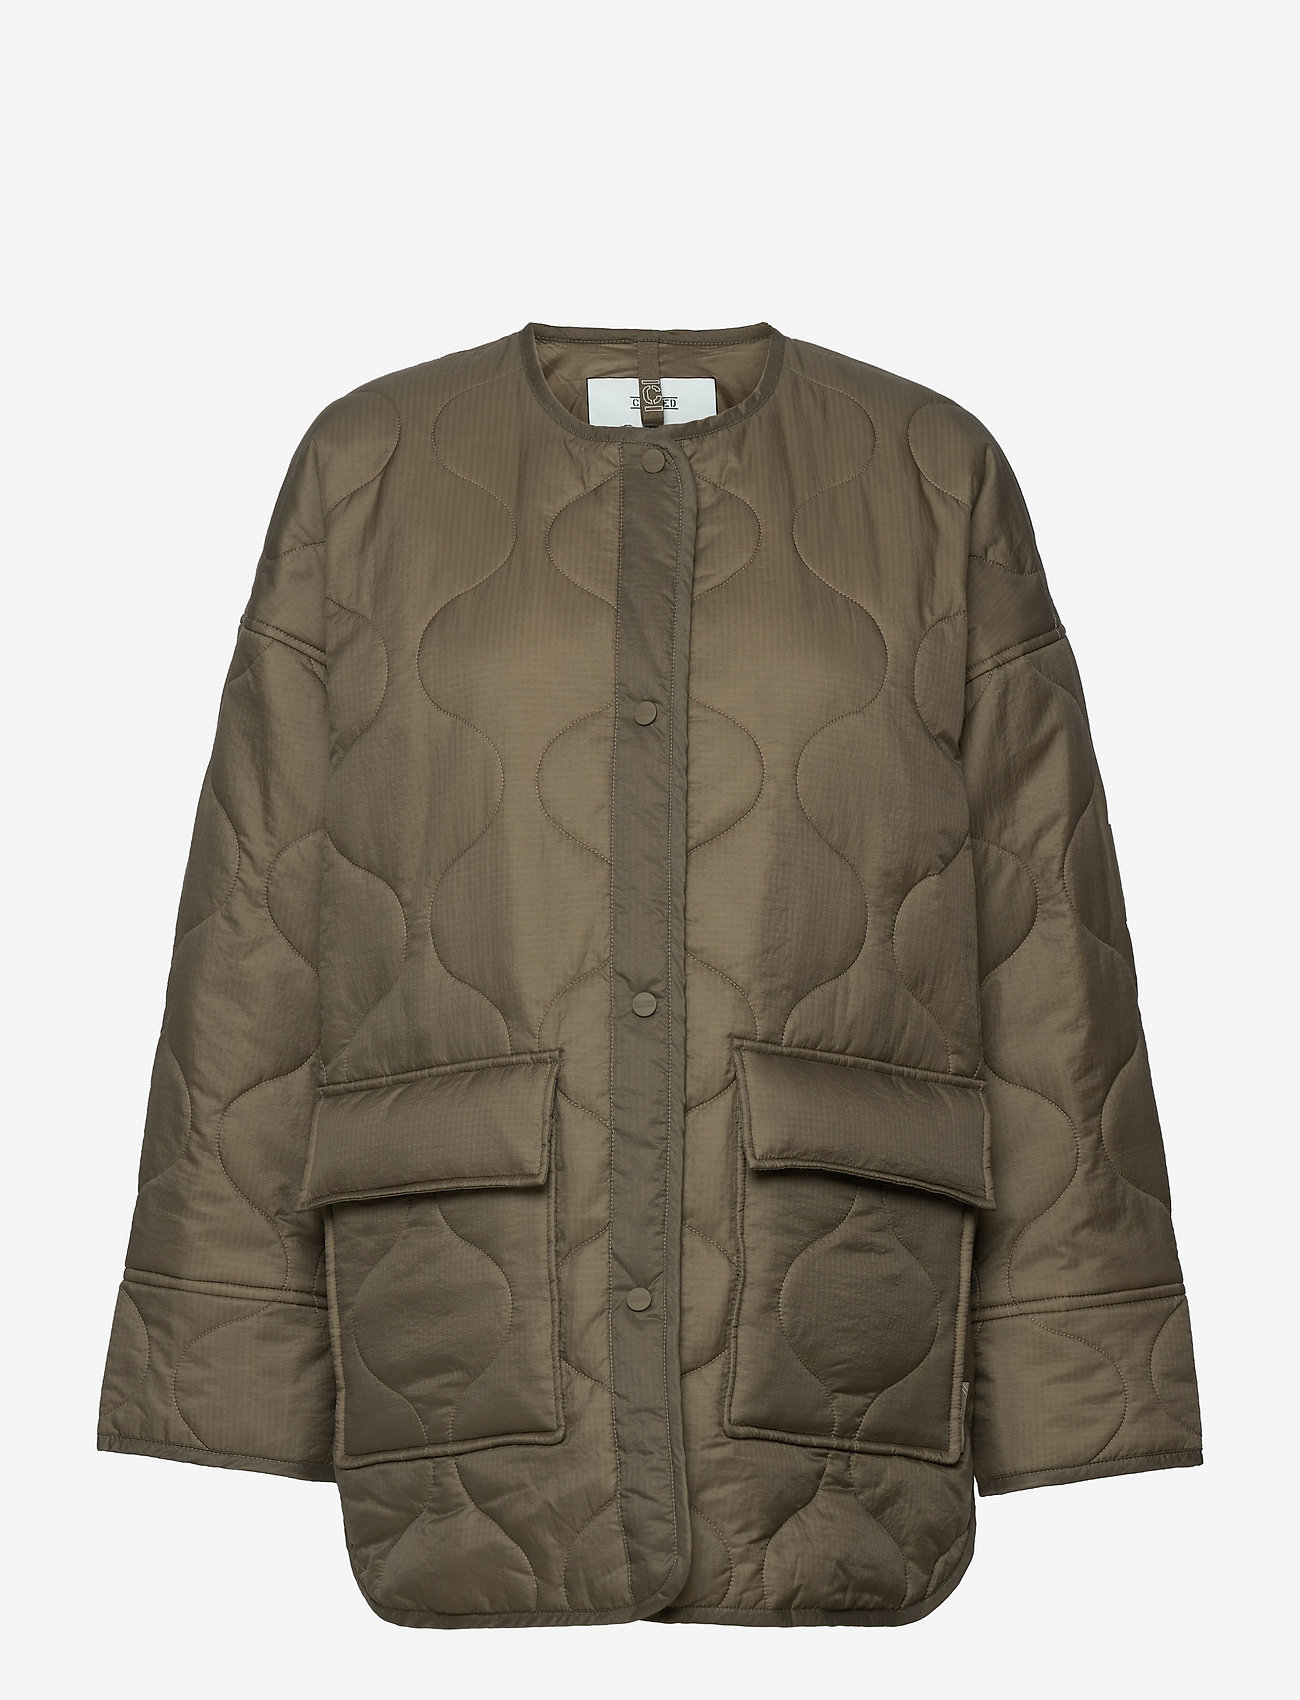 Closed - womens jacket - vestes matelassées - dried basil - 1